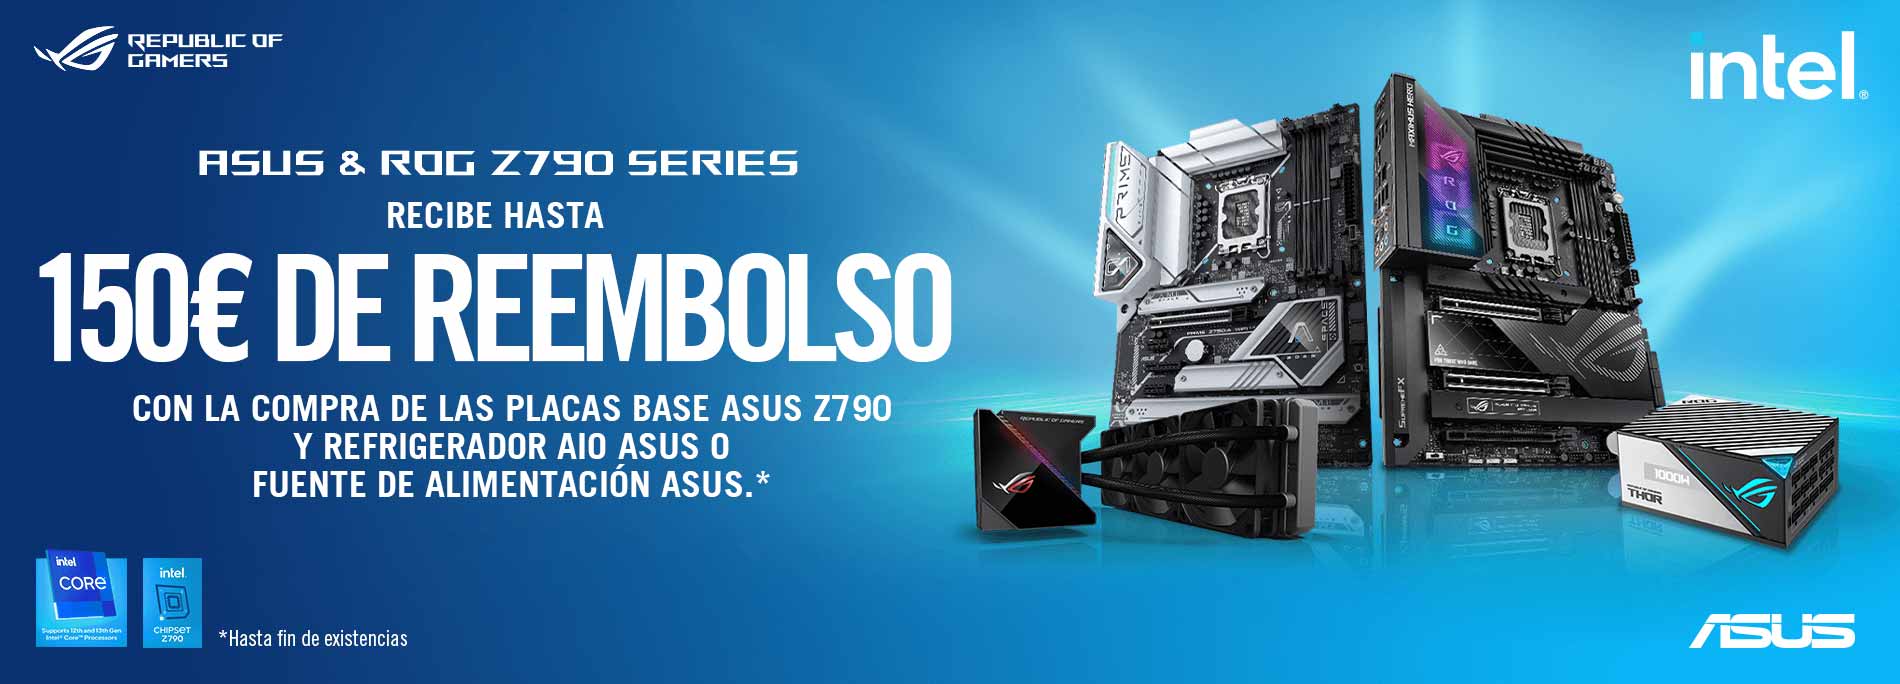 Promoción Asus serie Z790